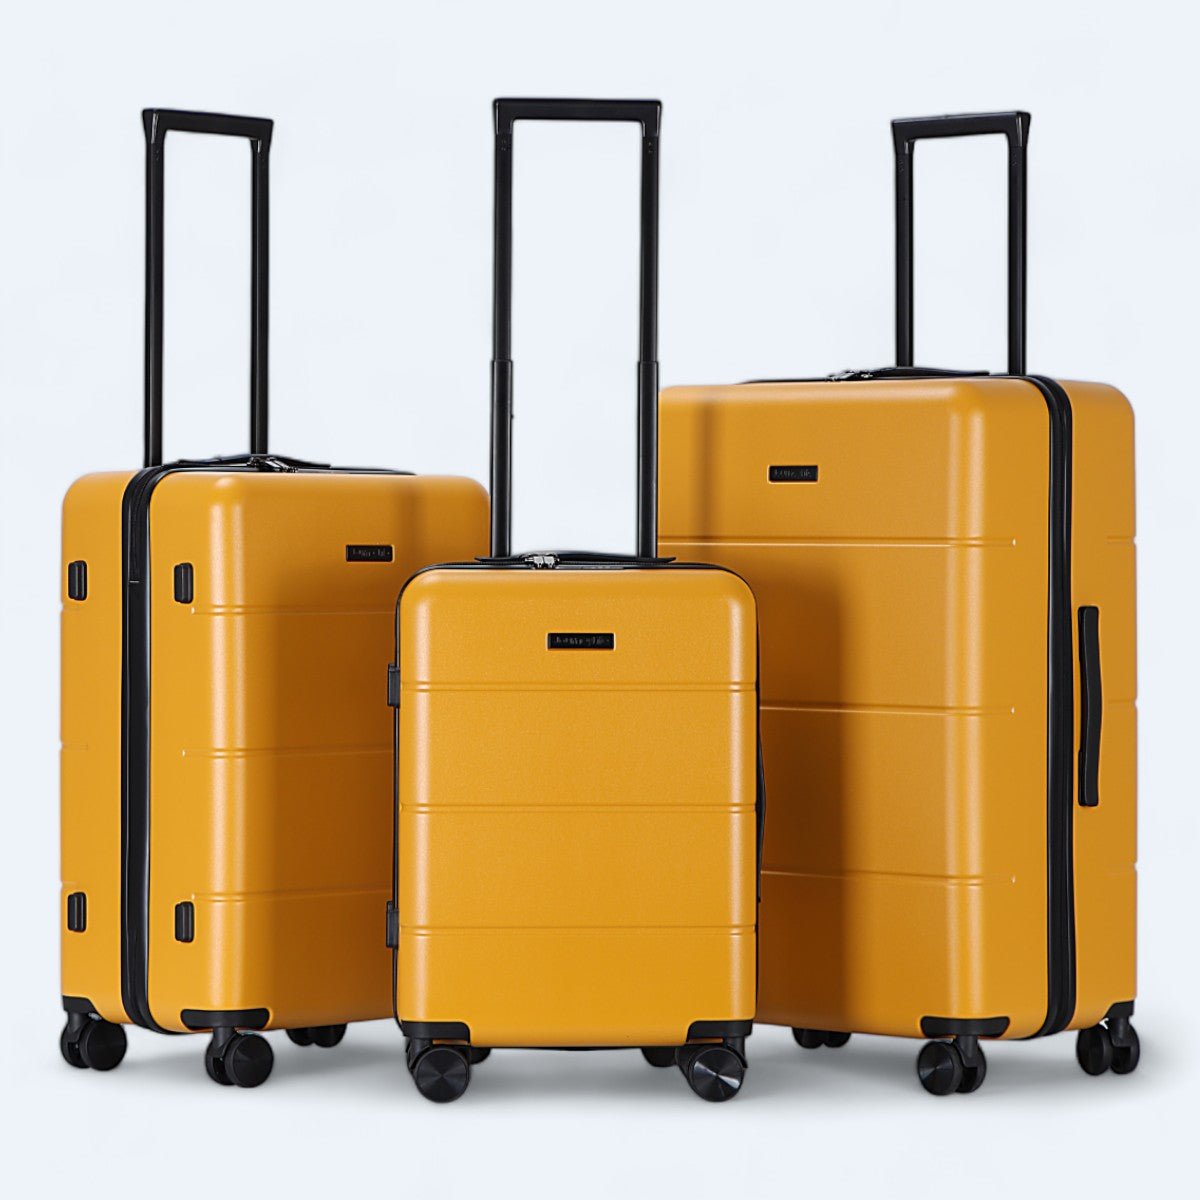 Gul = Journeylife explorer kuffertsæt i gult